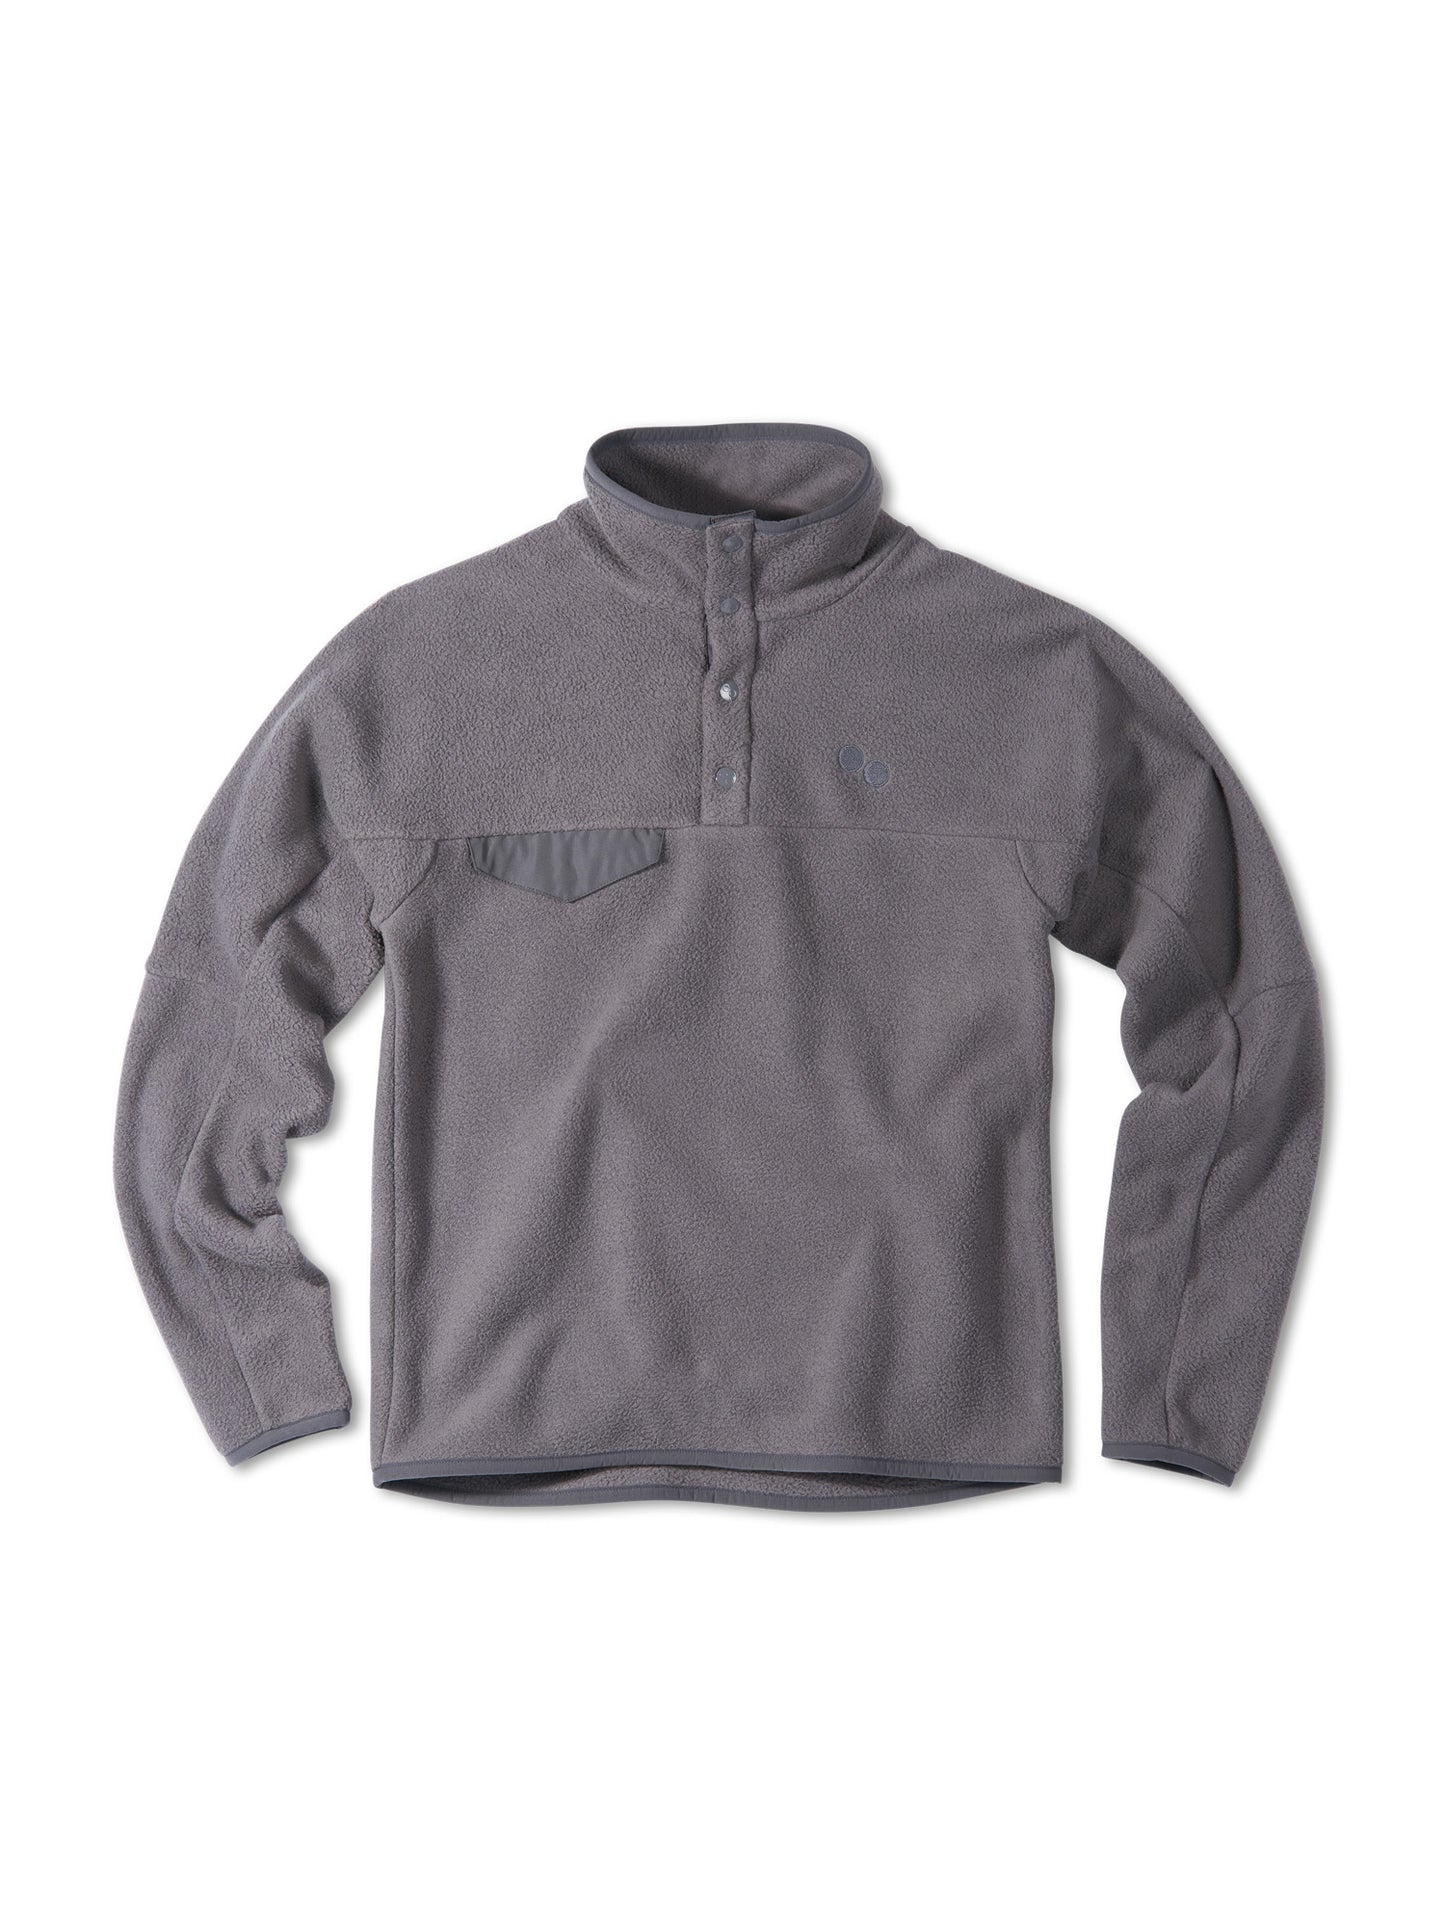 pinqponq-Fleece-Pullover-Graphite-Grey-front